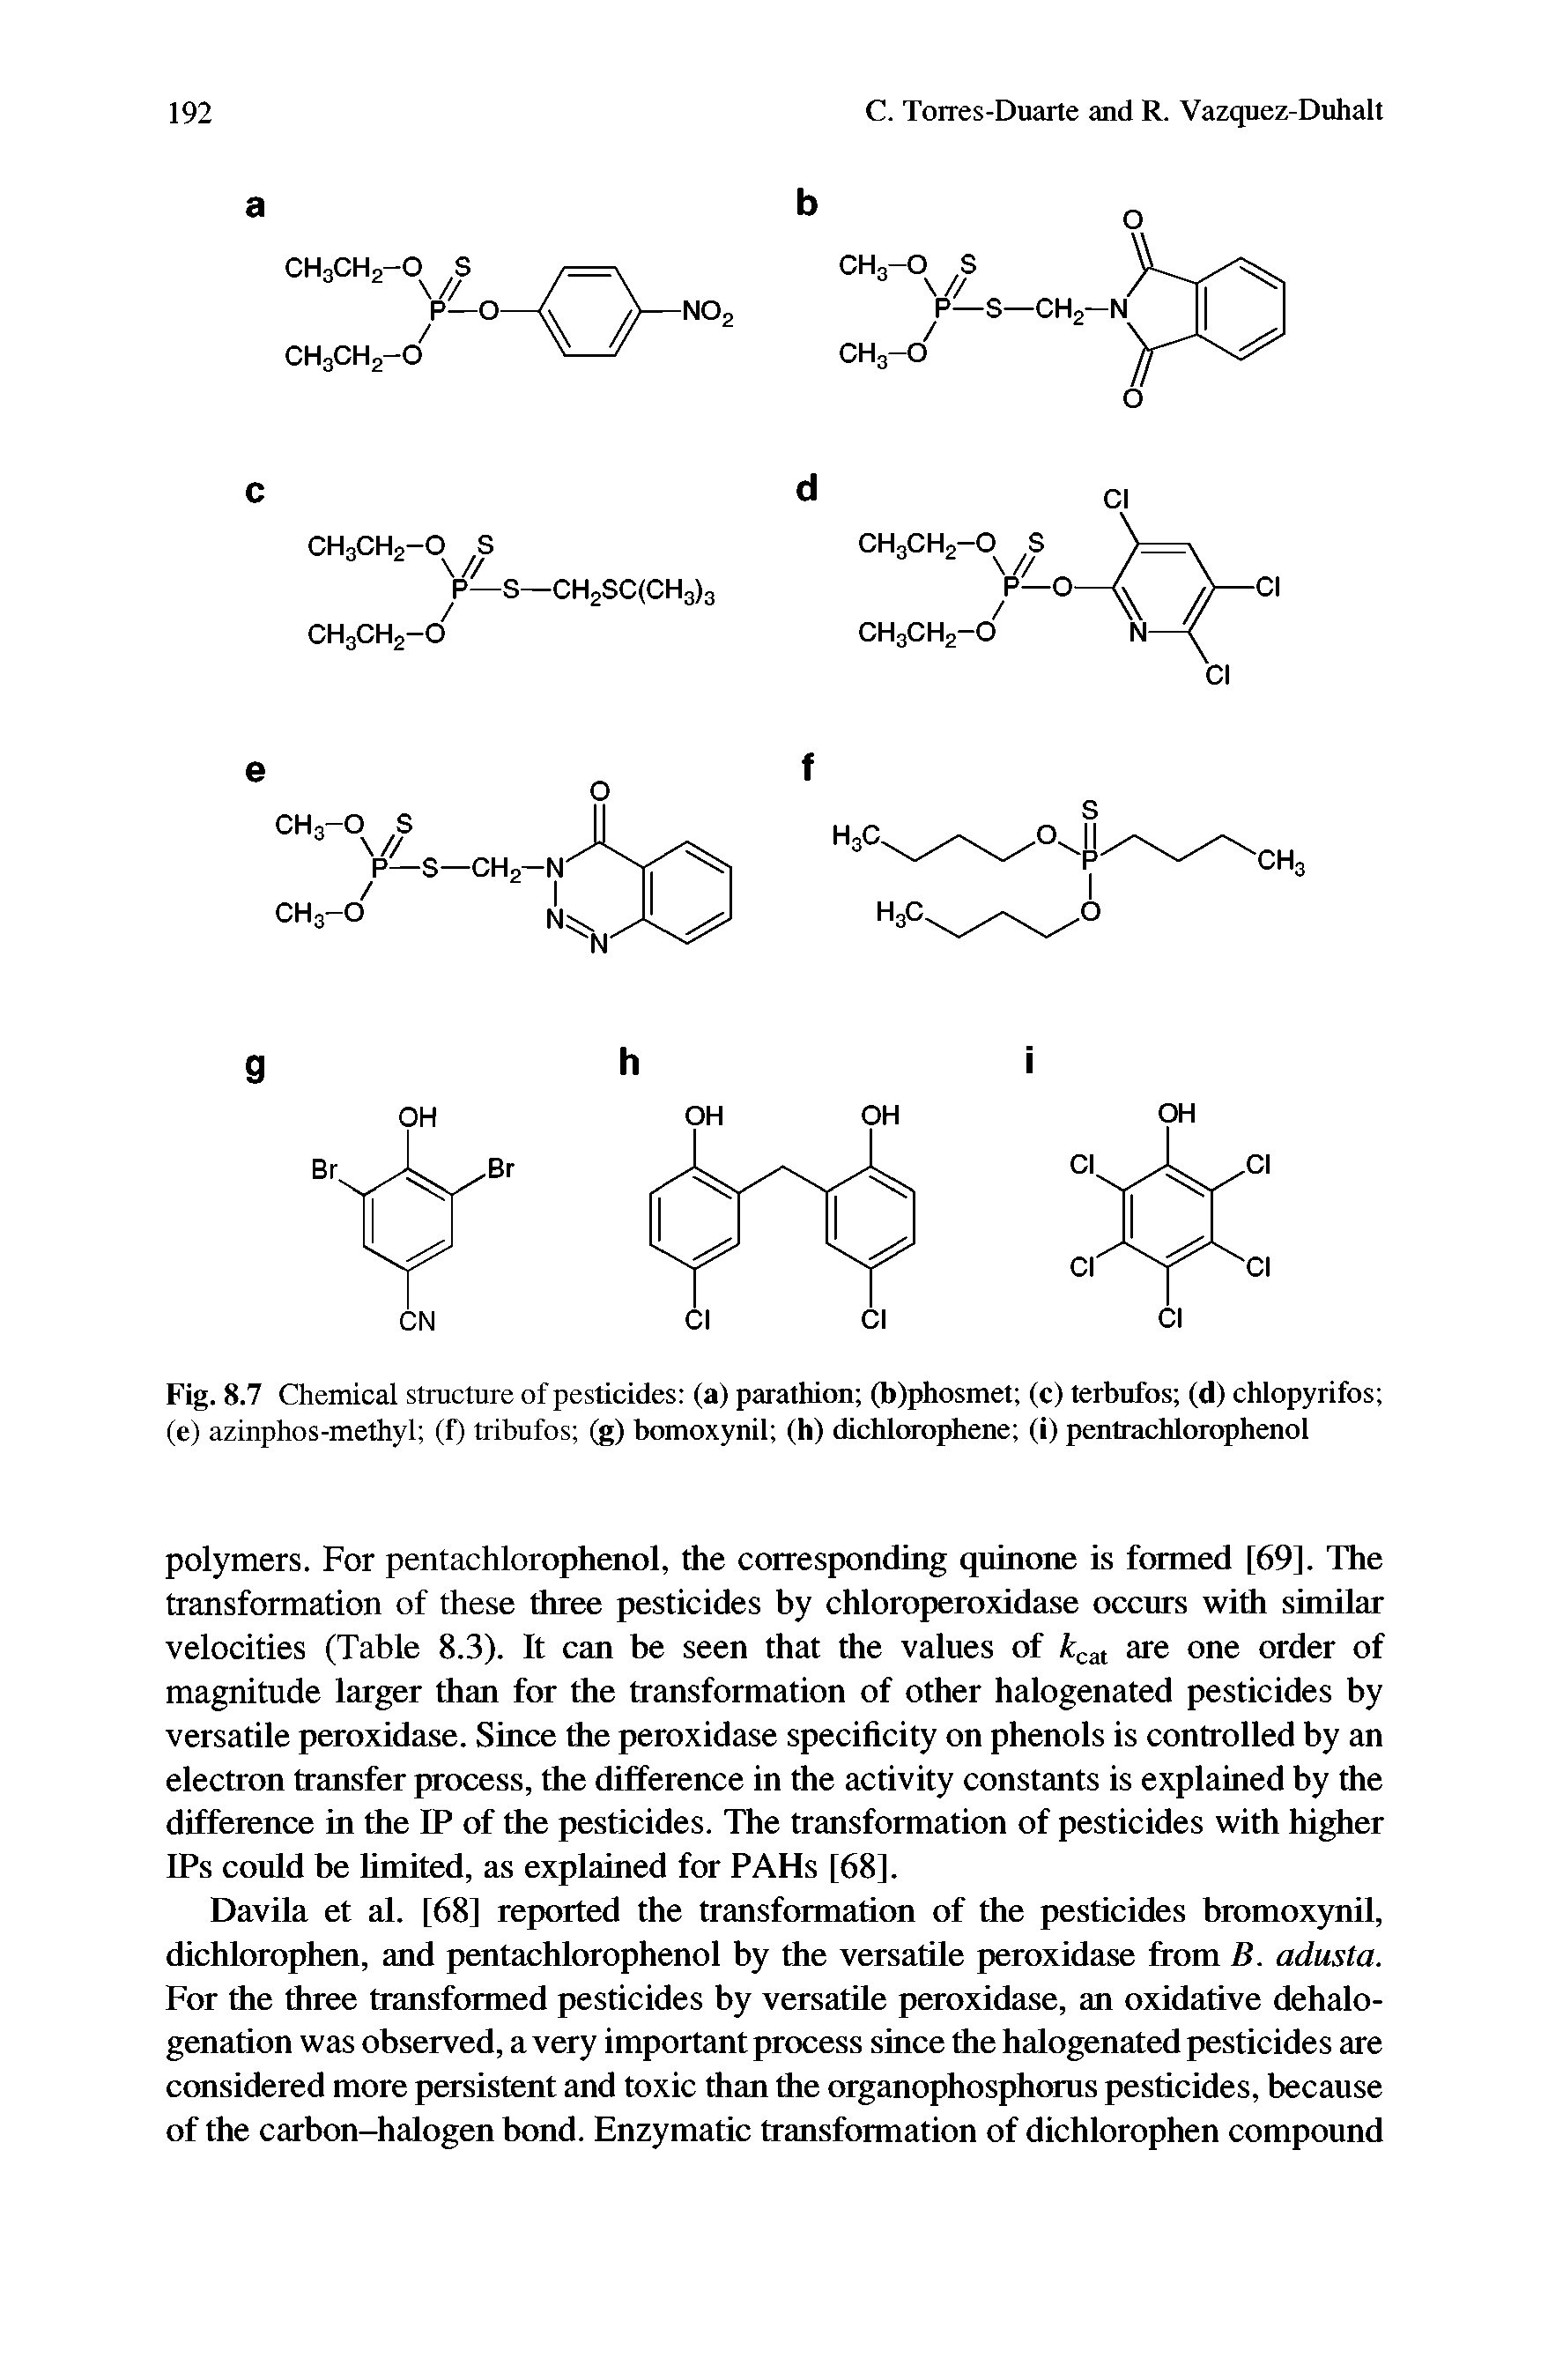 Fig. 8.7 Chemical structure of pesticides (a) parathion (b)phosmet (c) terbufos (d) chlopyrifos (e) azinphos-methyl (f) tribufos (g) bomoxynil (h) dichlorophene (i) pentrachlorophenol...